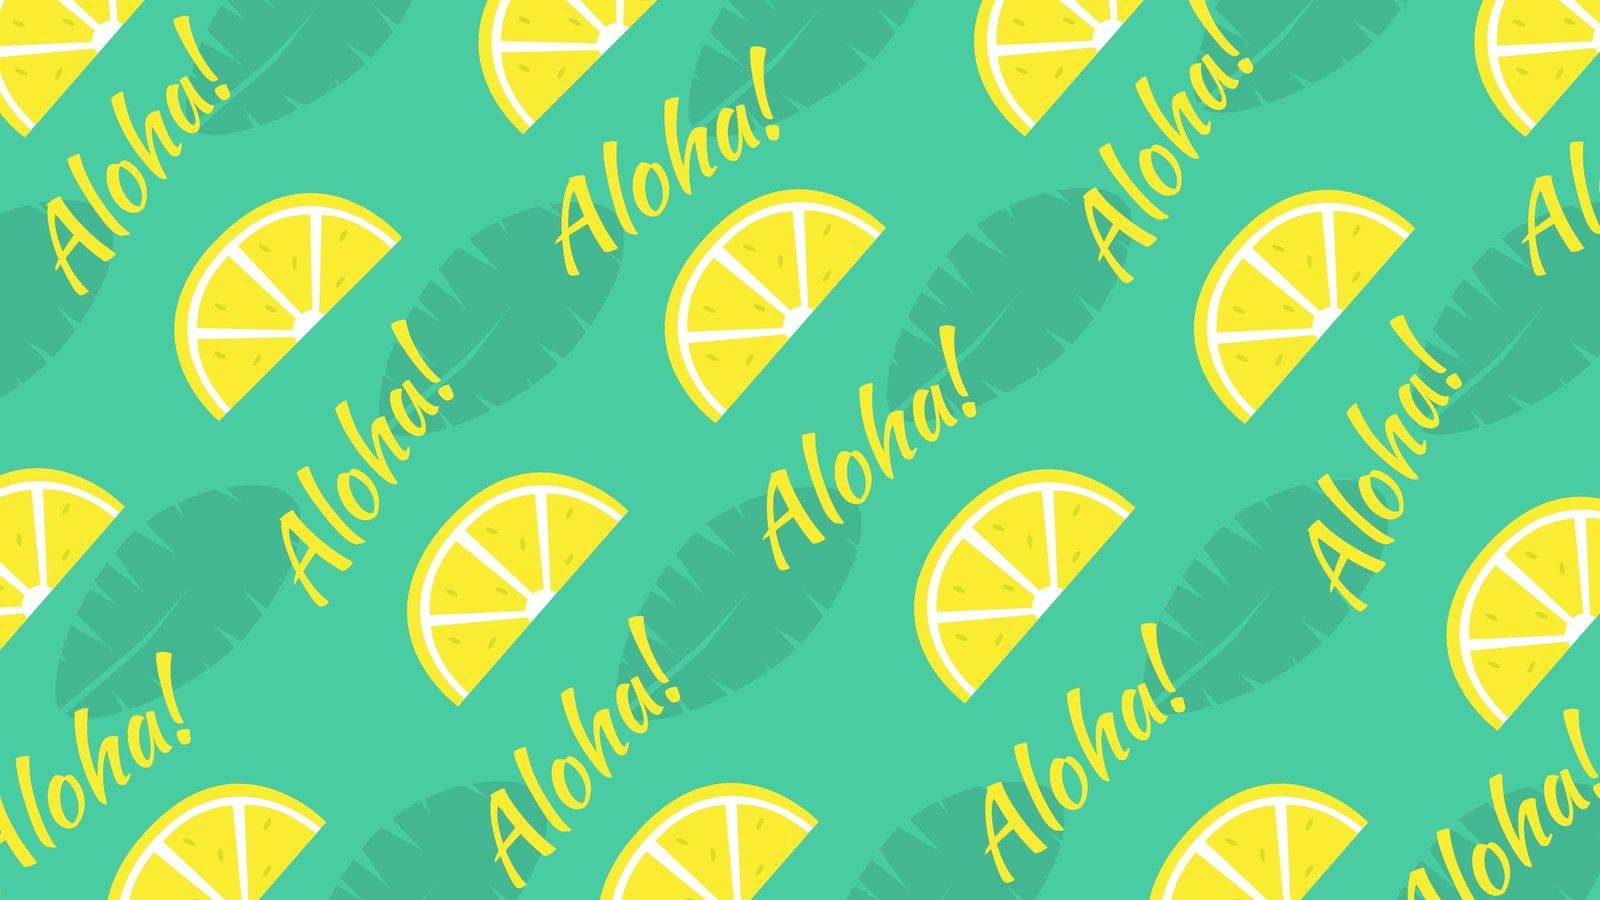 Aloha Wallpapers K Hd Aloha Backgrounds On Wallpaperbat